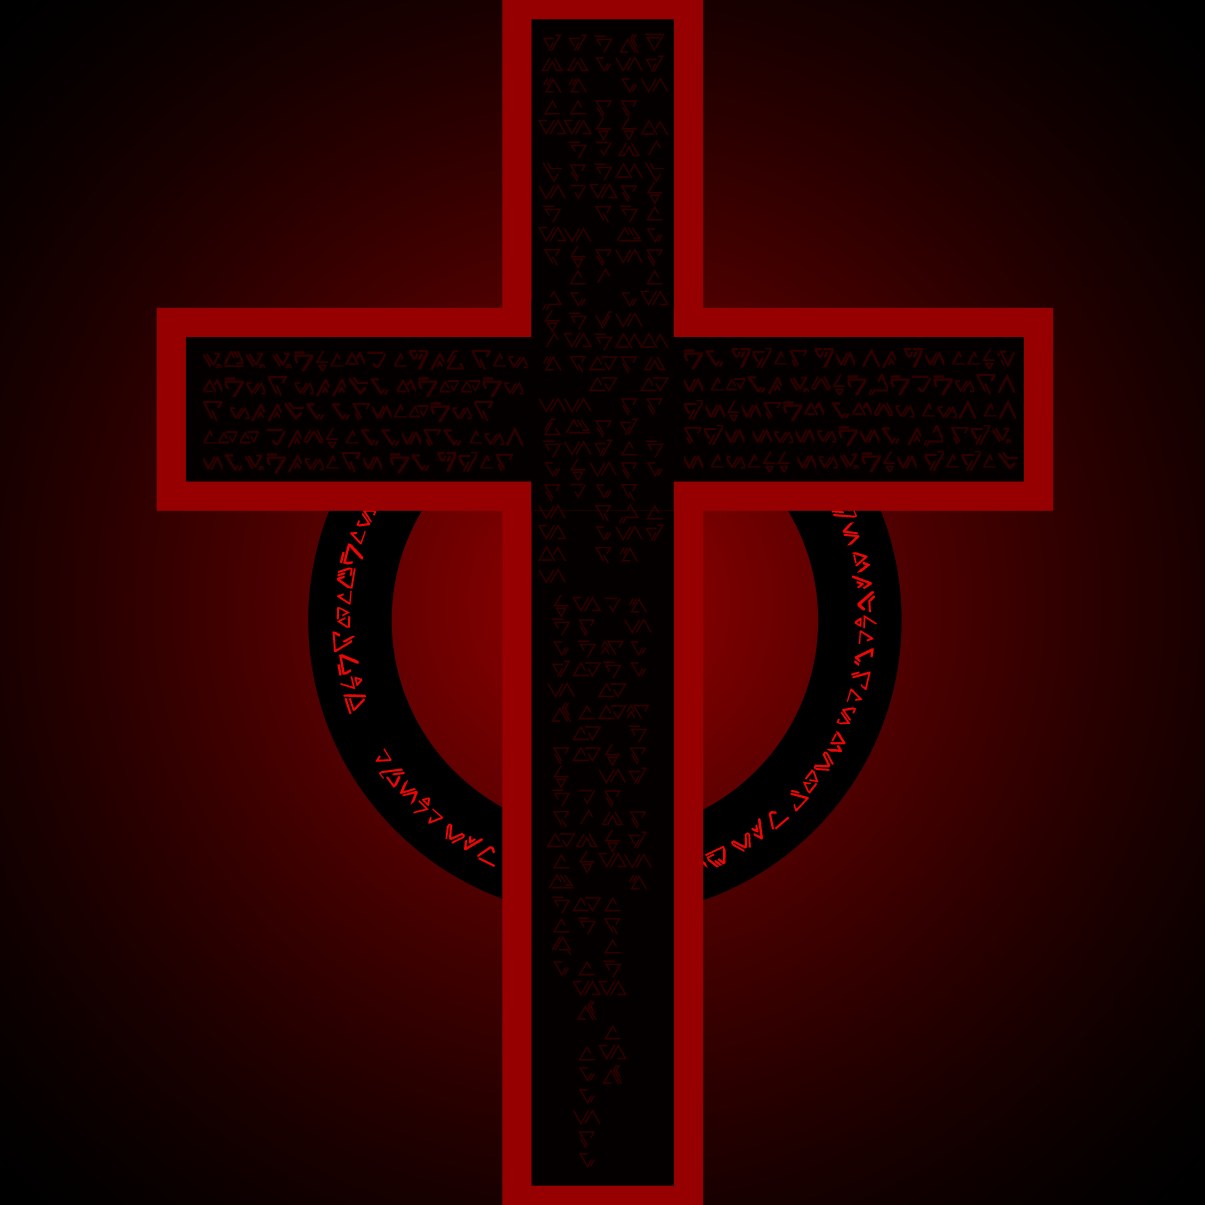 The_Cobrastan_Cult_Vercorized_Logo_Final_2.0.png